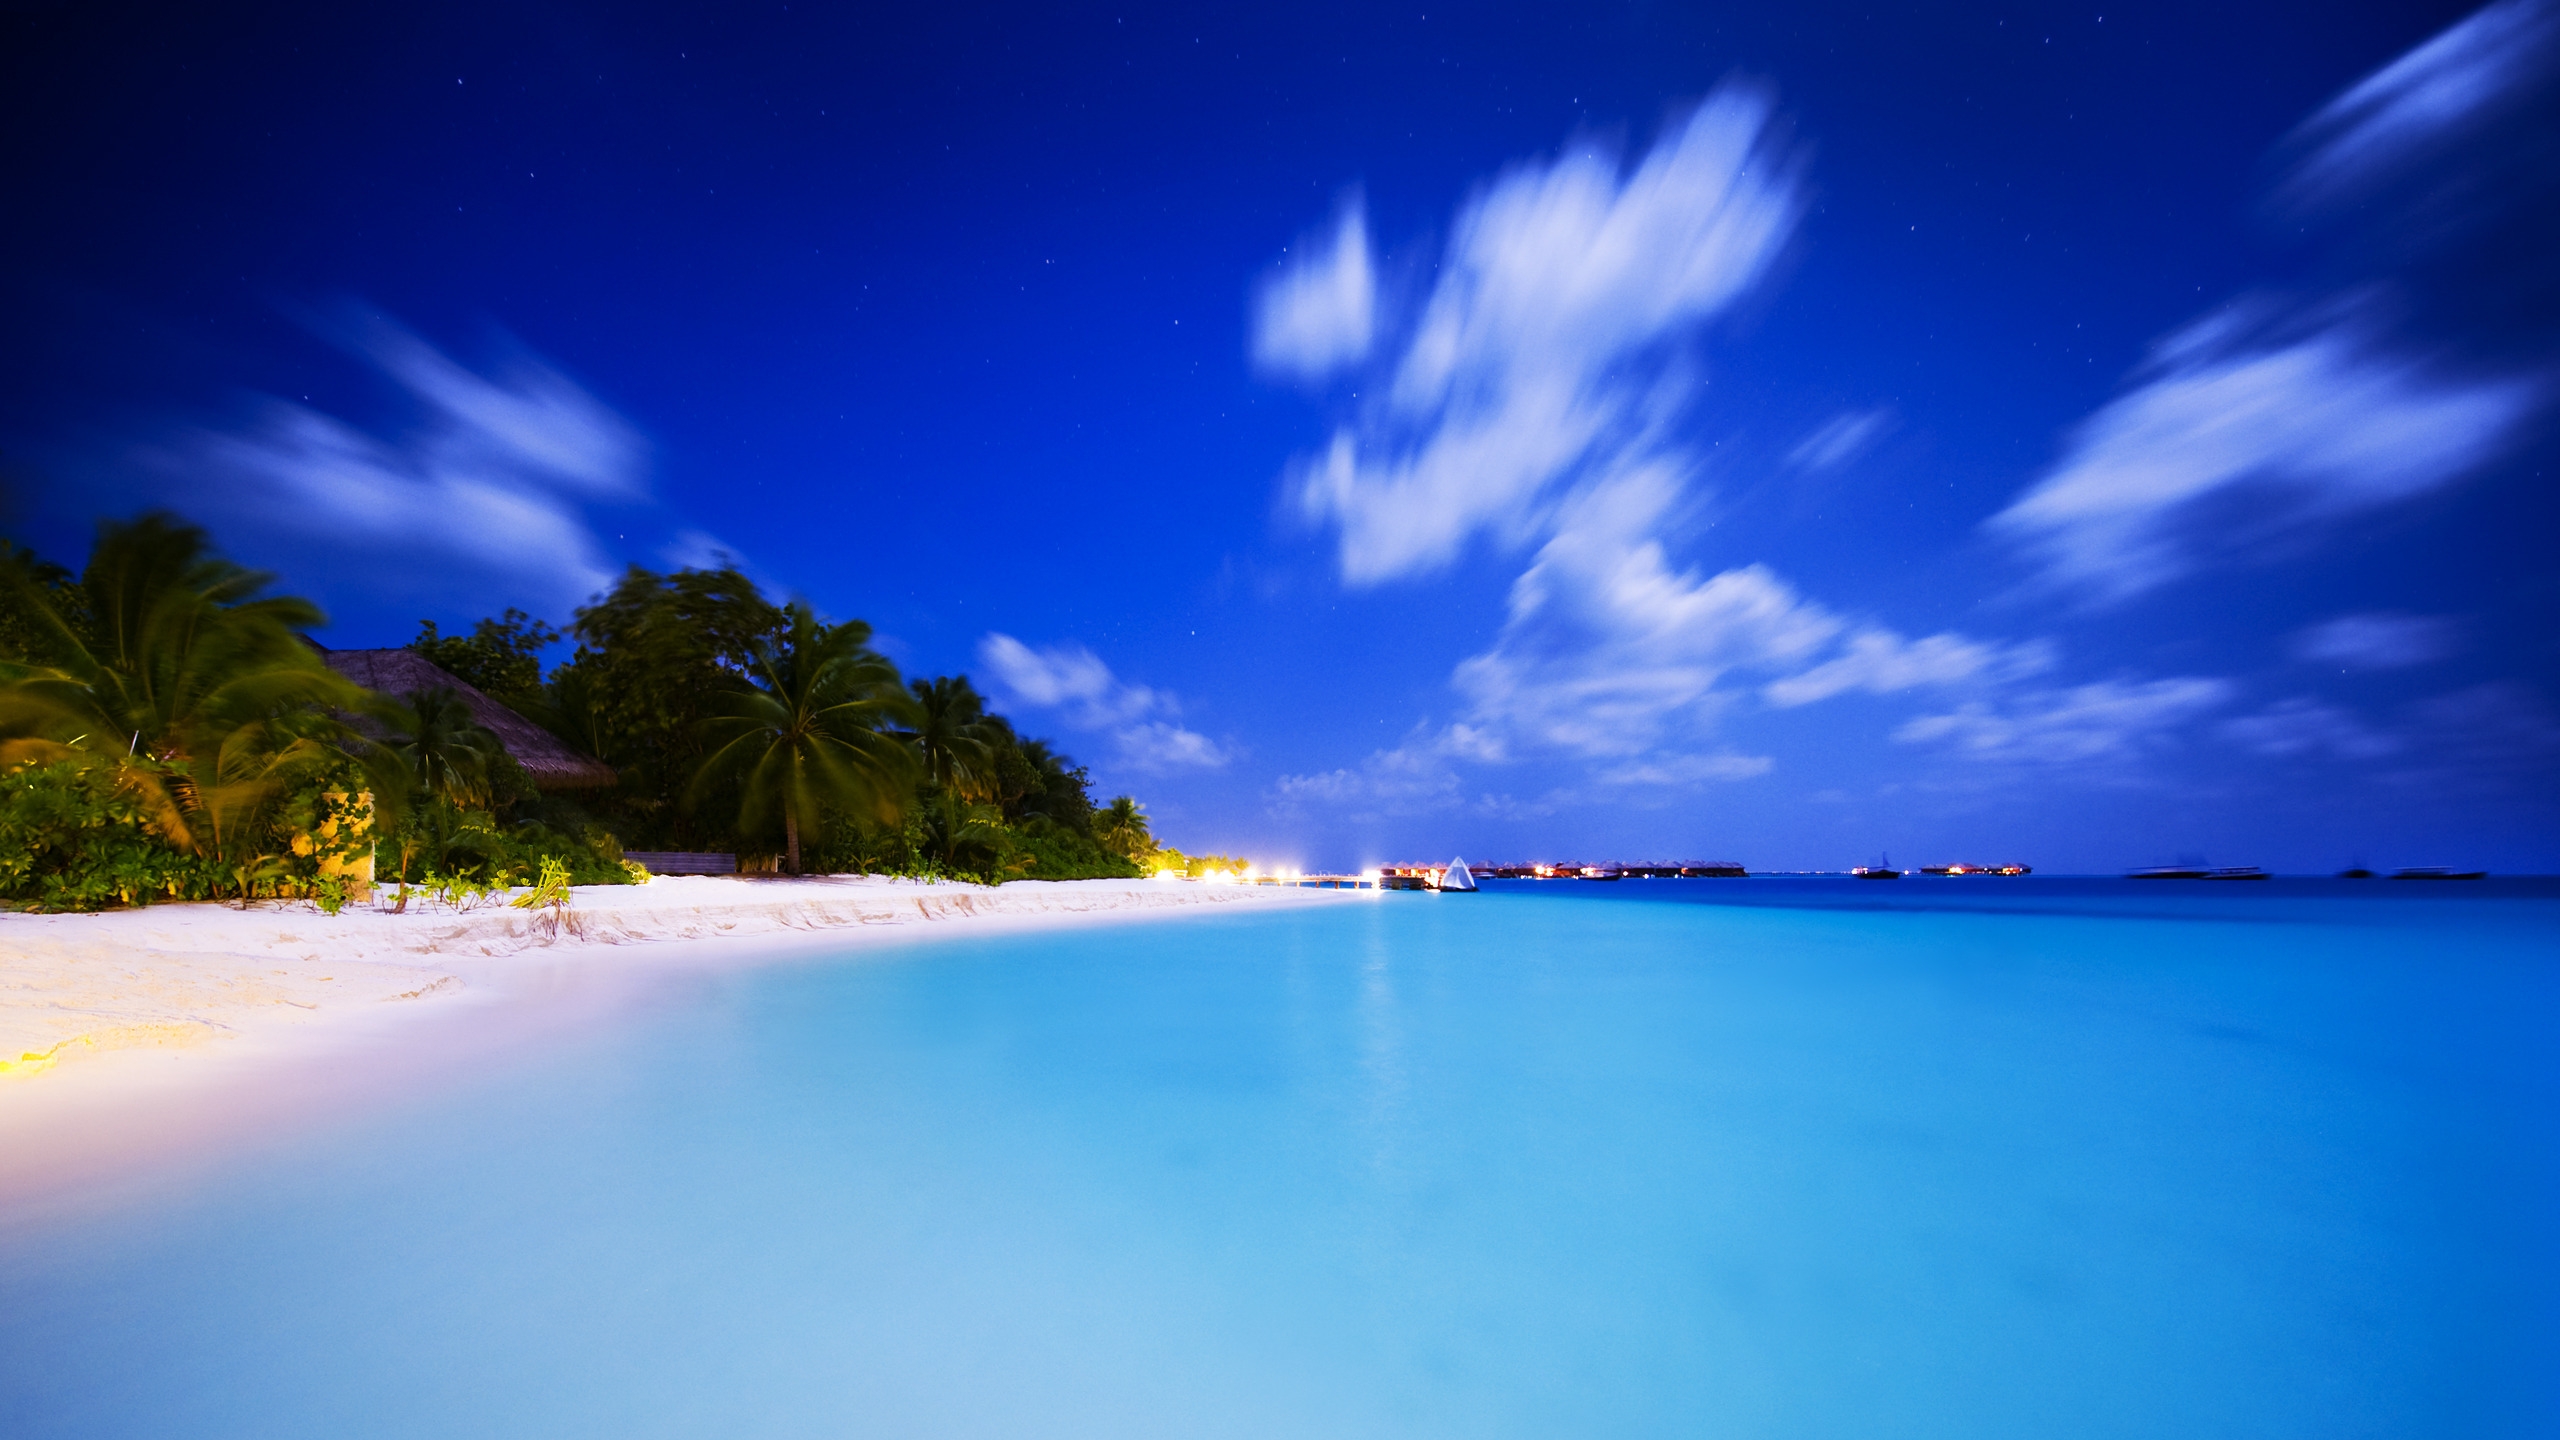 Maldivian Night for 2560x1440 HDTV resolution